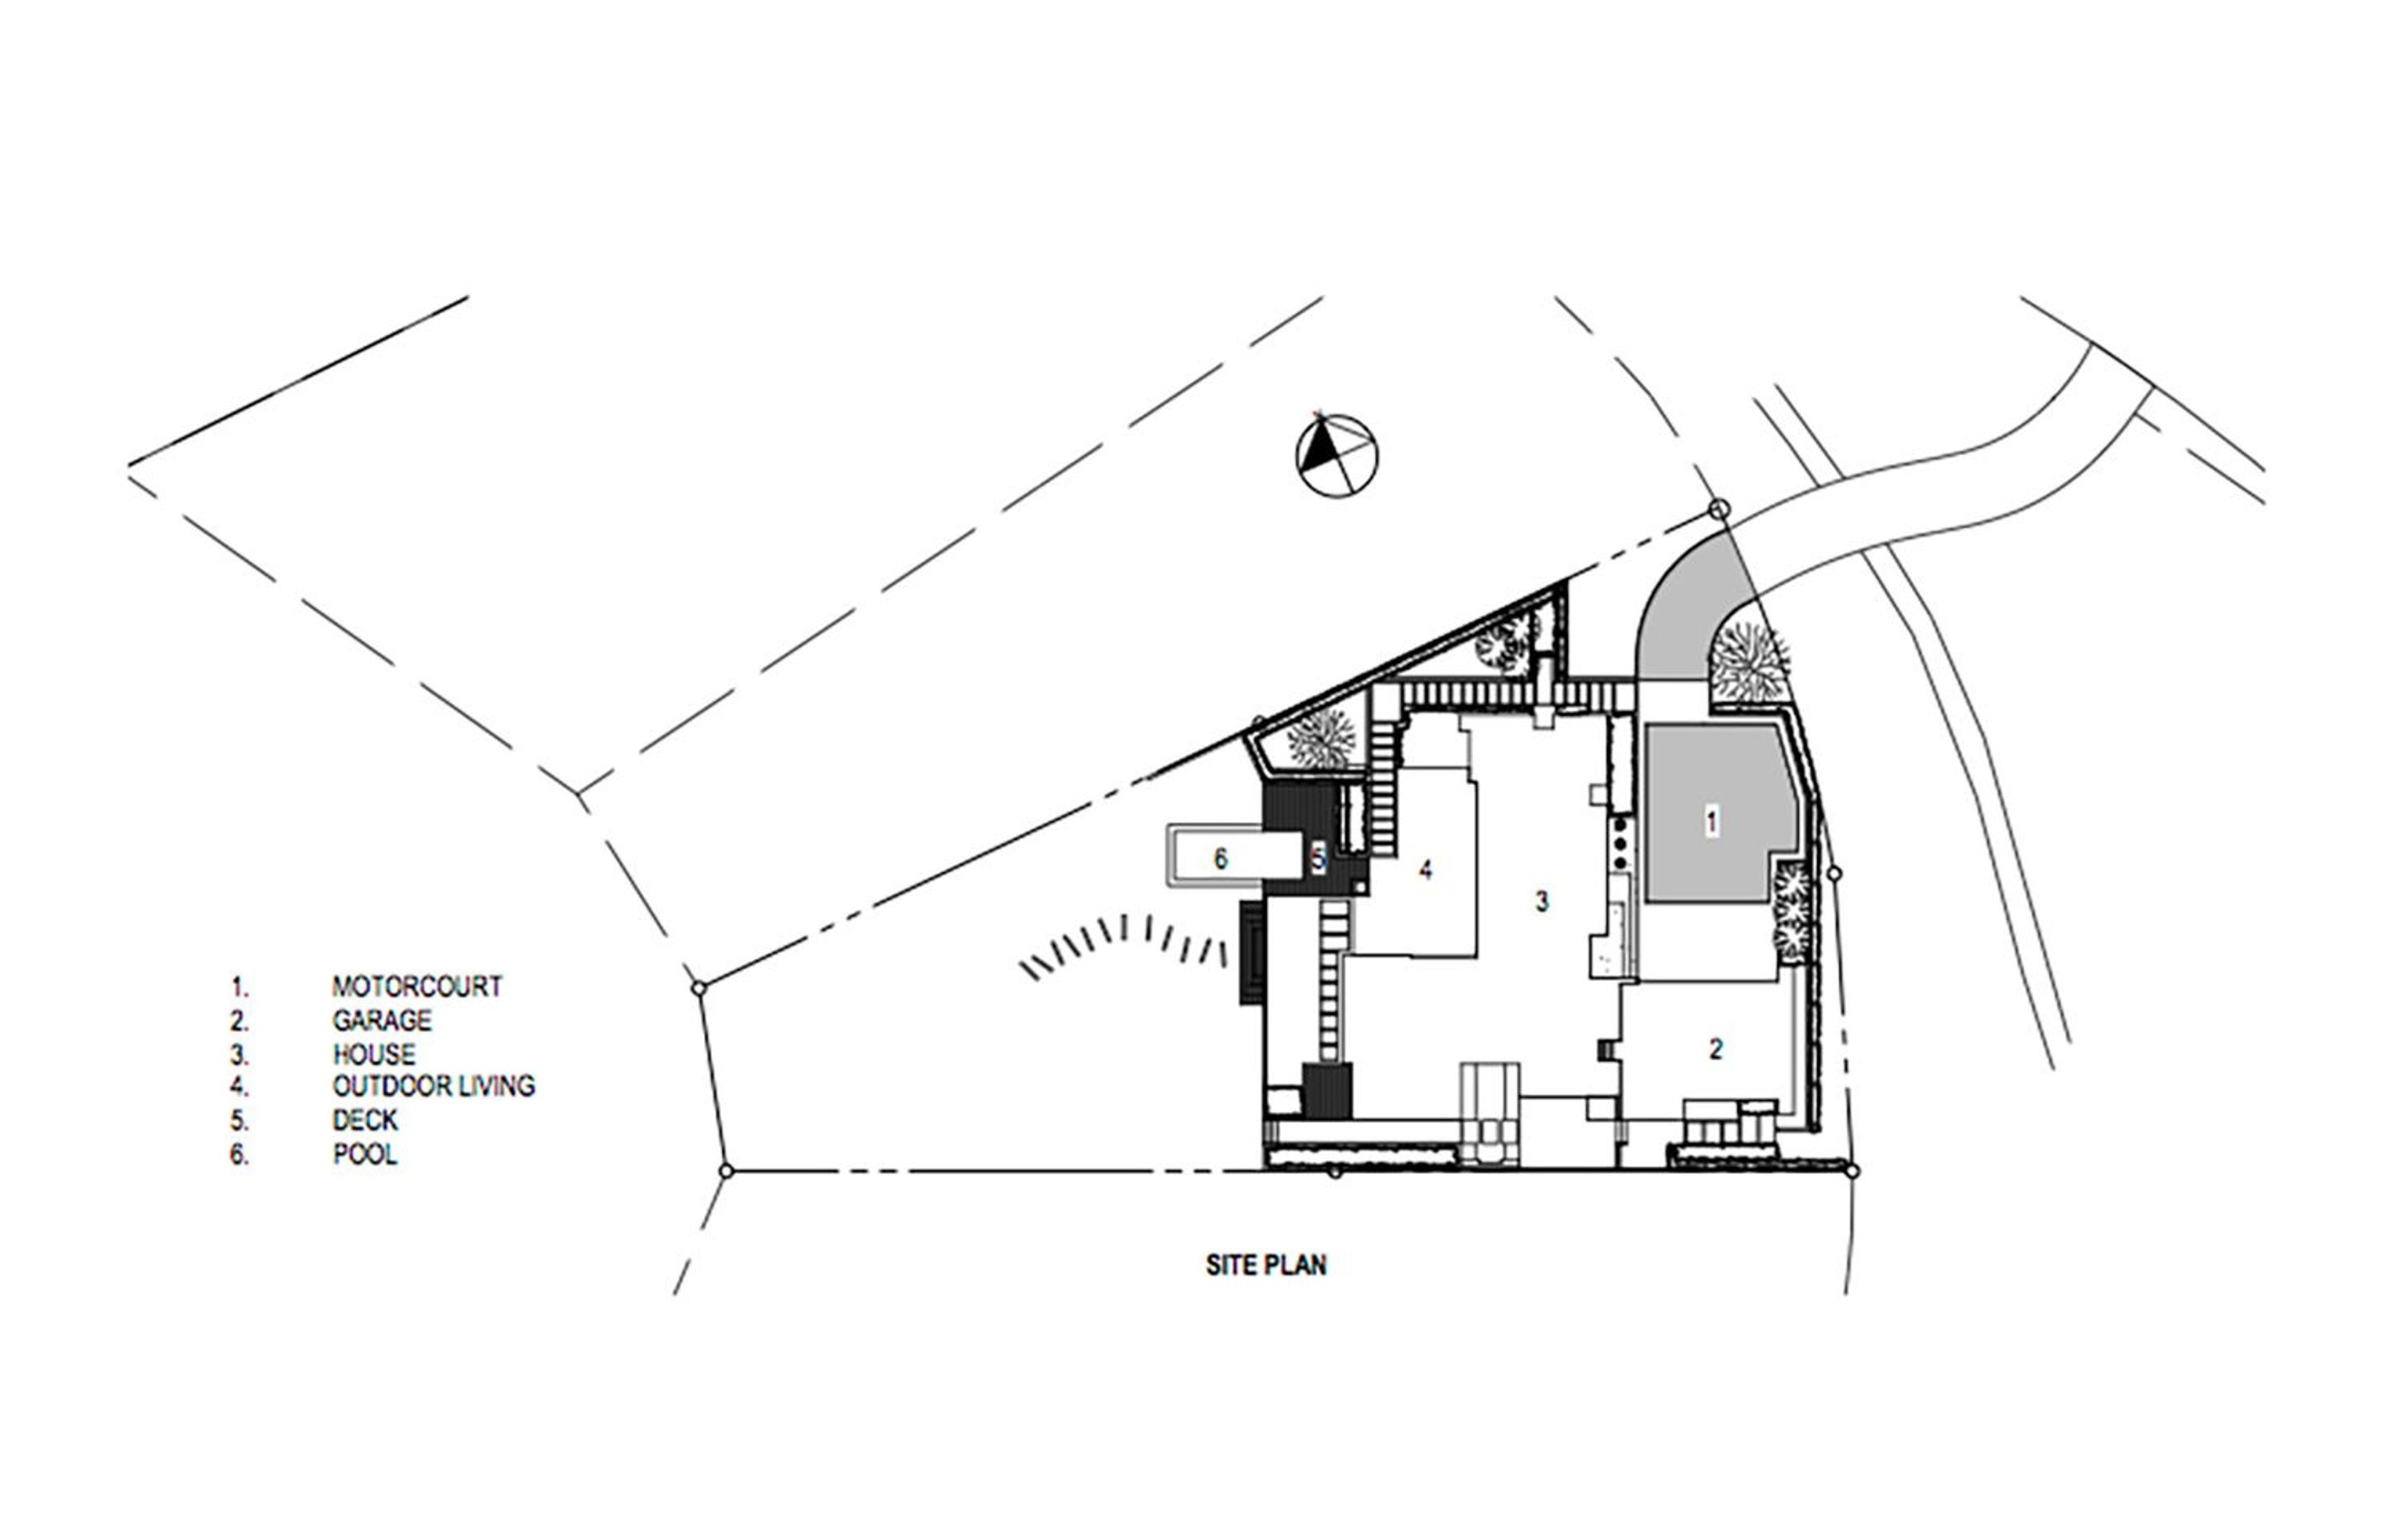 Nau Mai site plan by O'Neil Architecture.